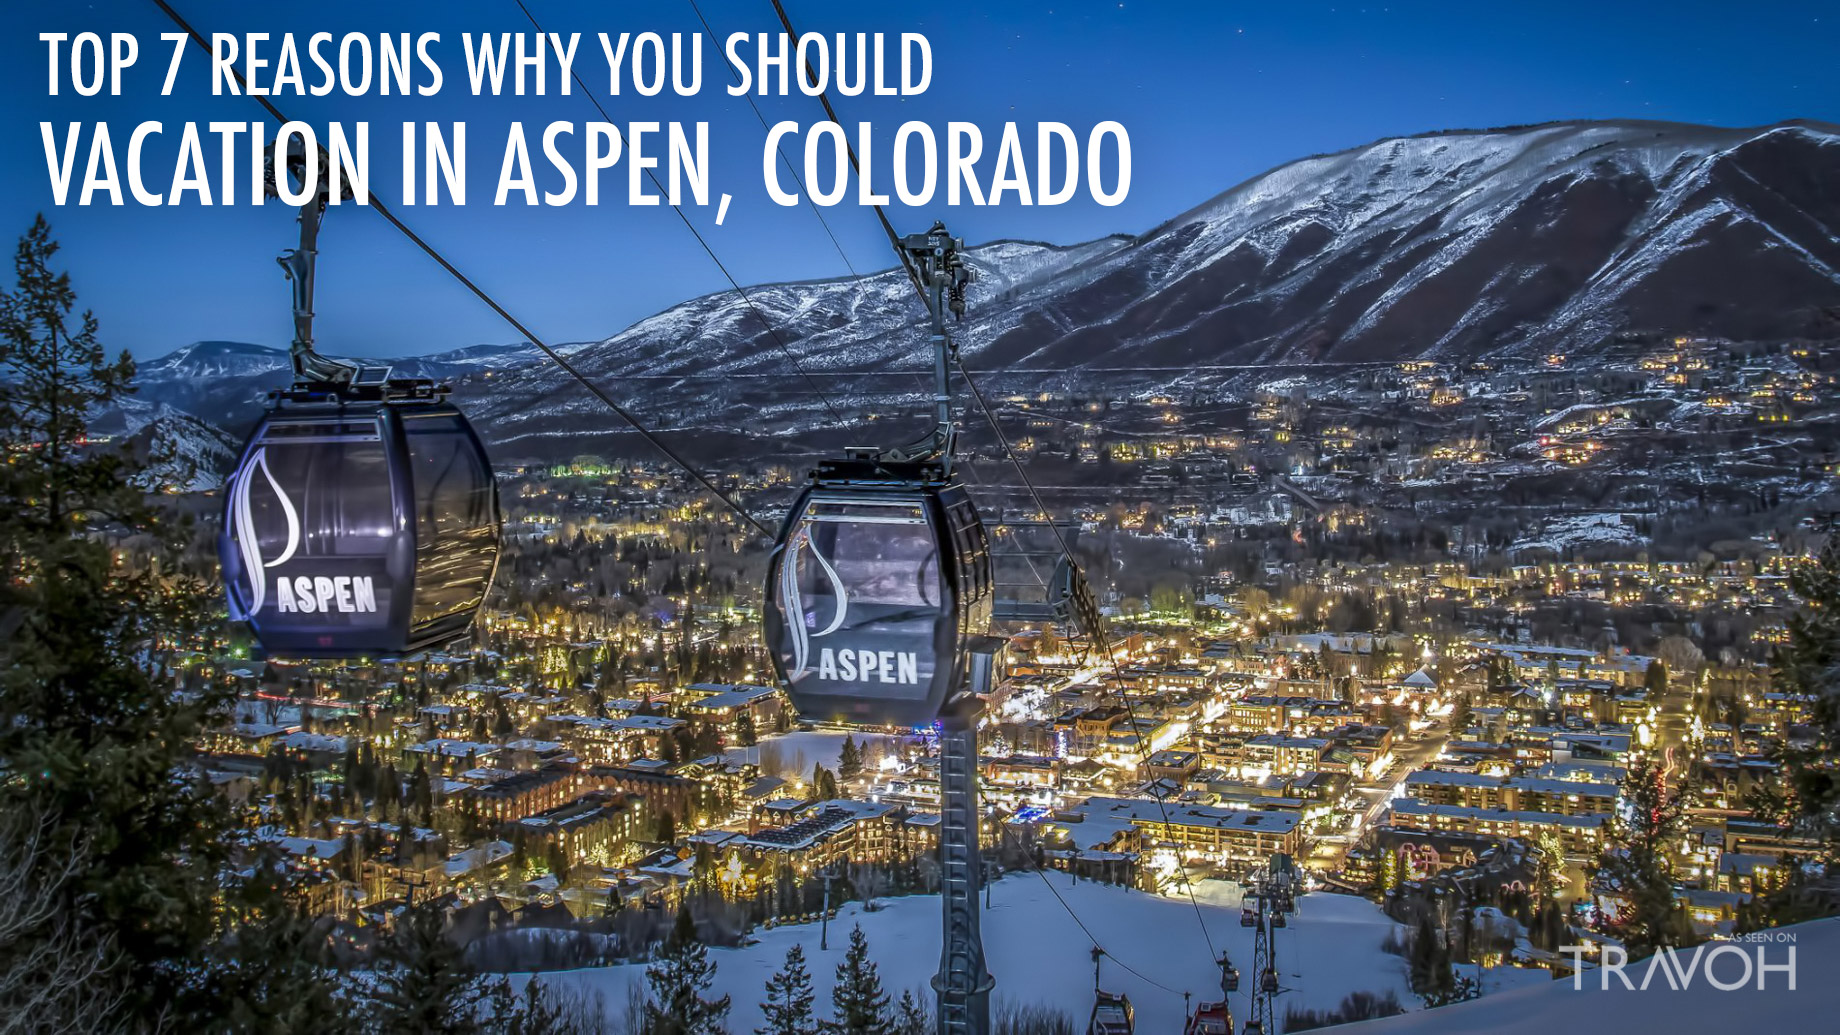 Top 7 Reasons Why You Should Vacation in Aspen, Colorado